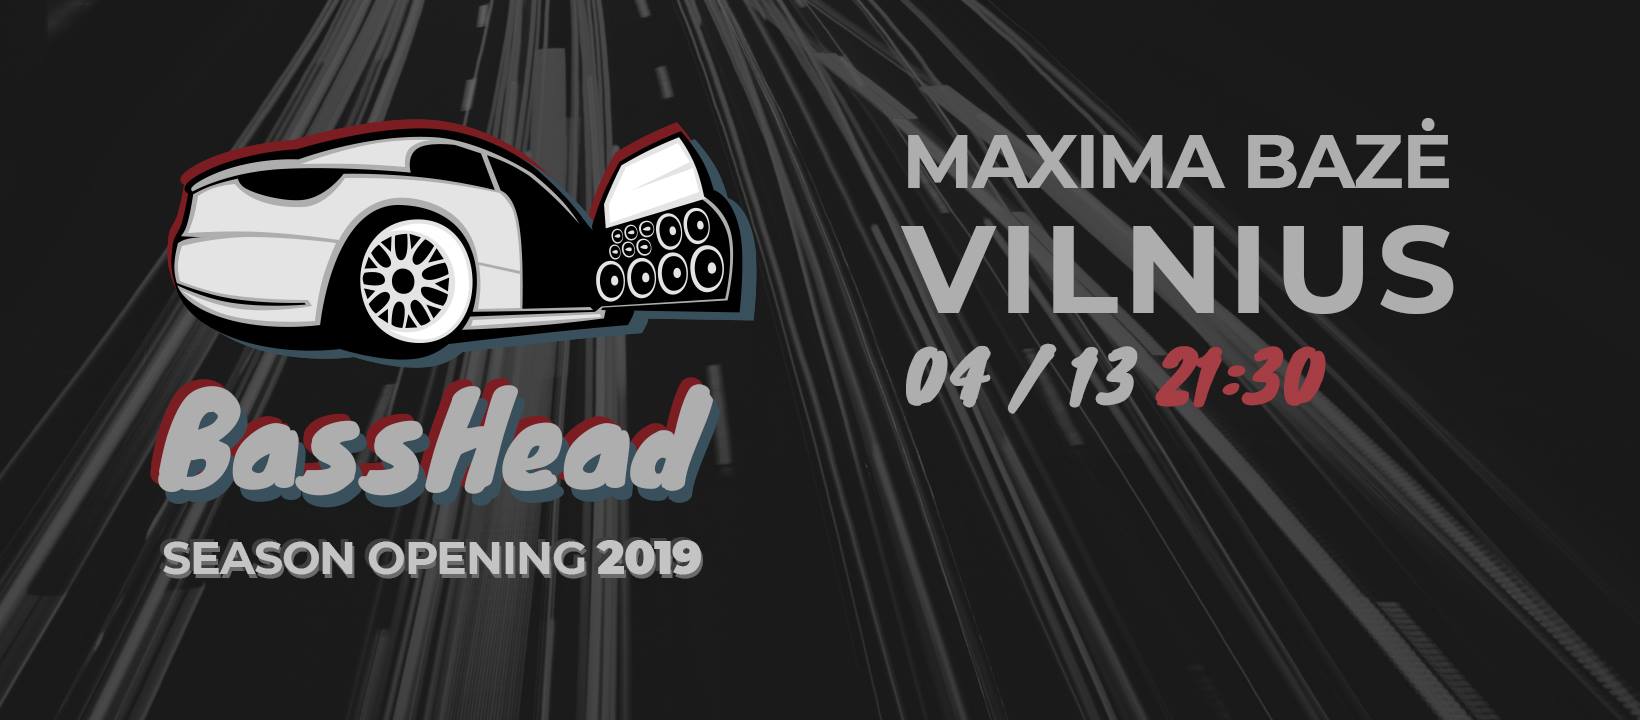 Basshead season opening 2019